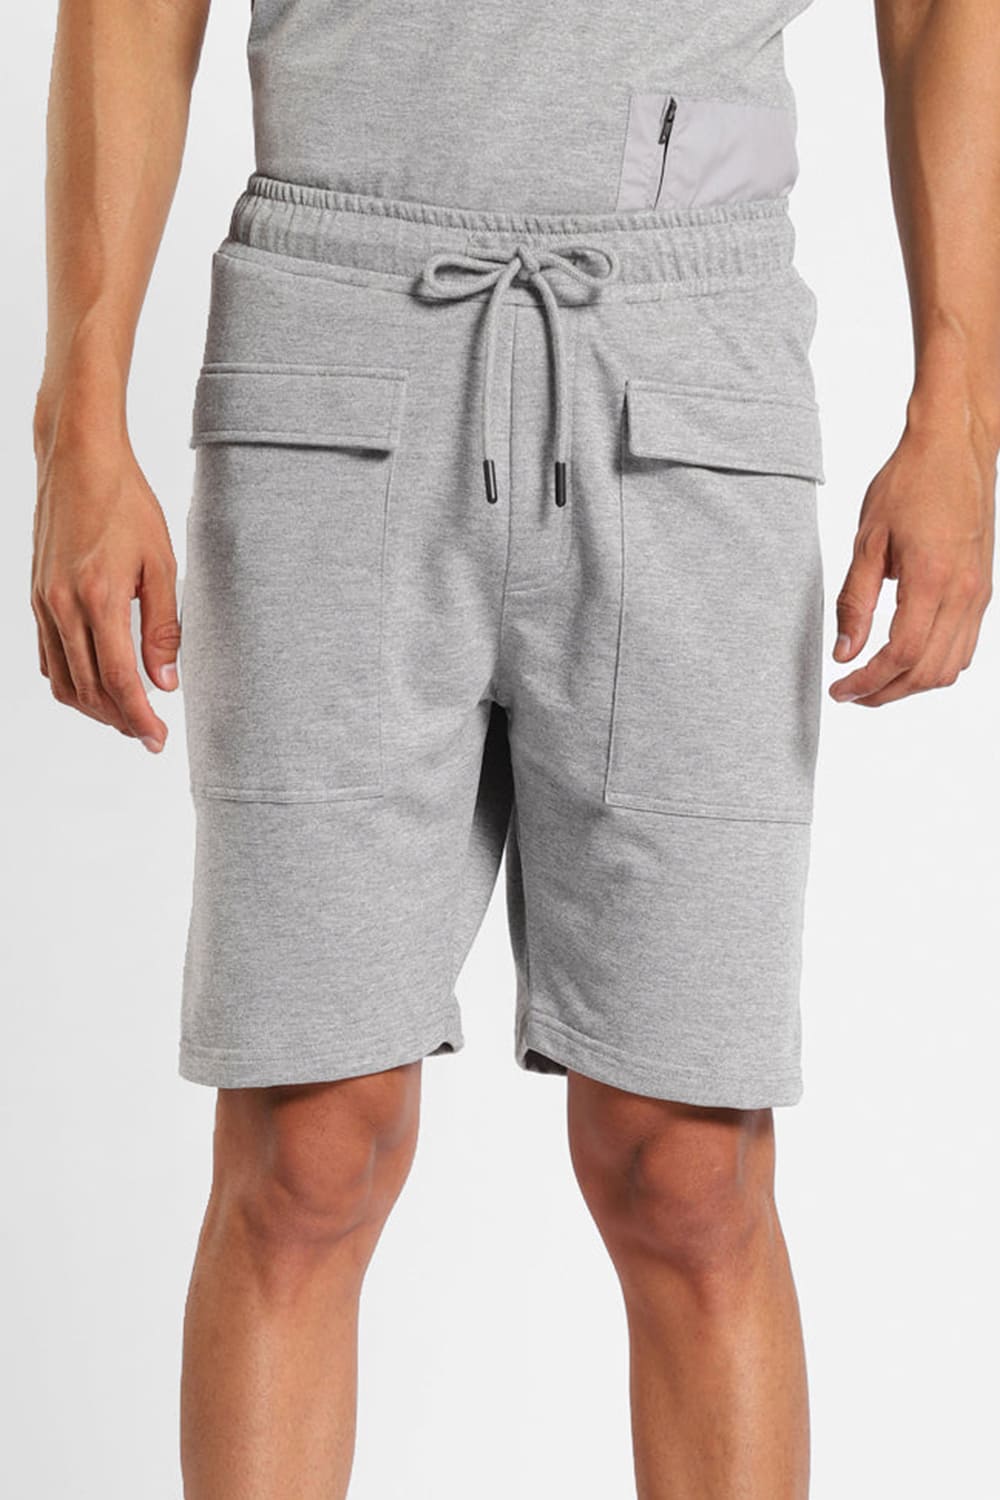 Hermes Utility Shorts